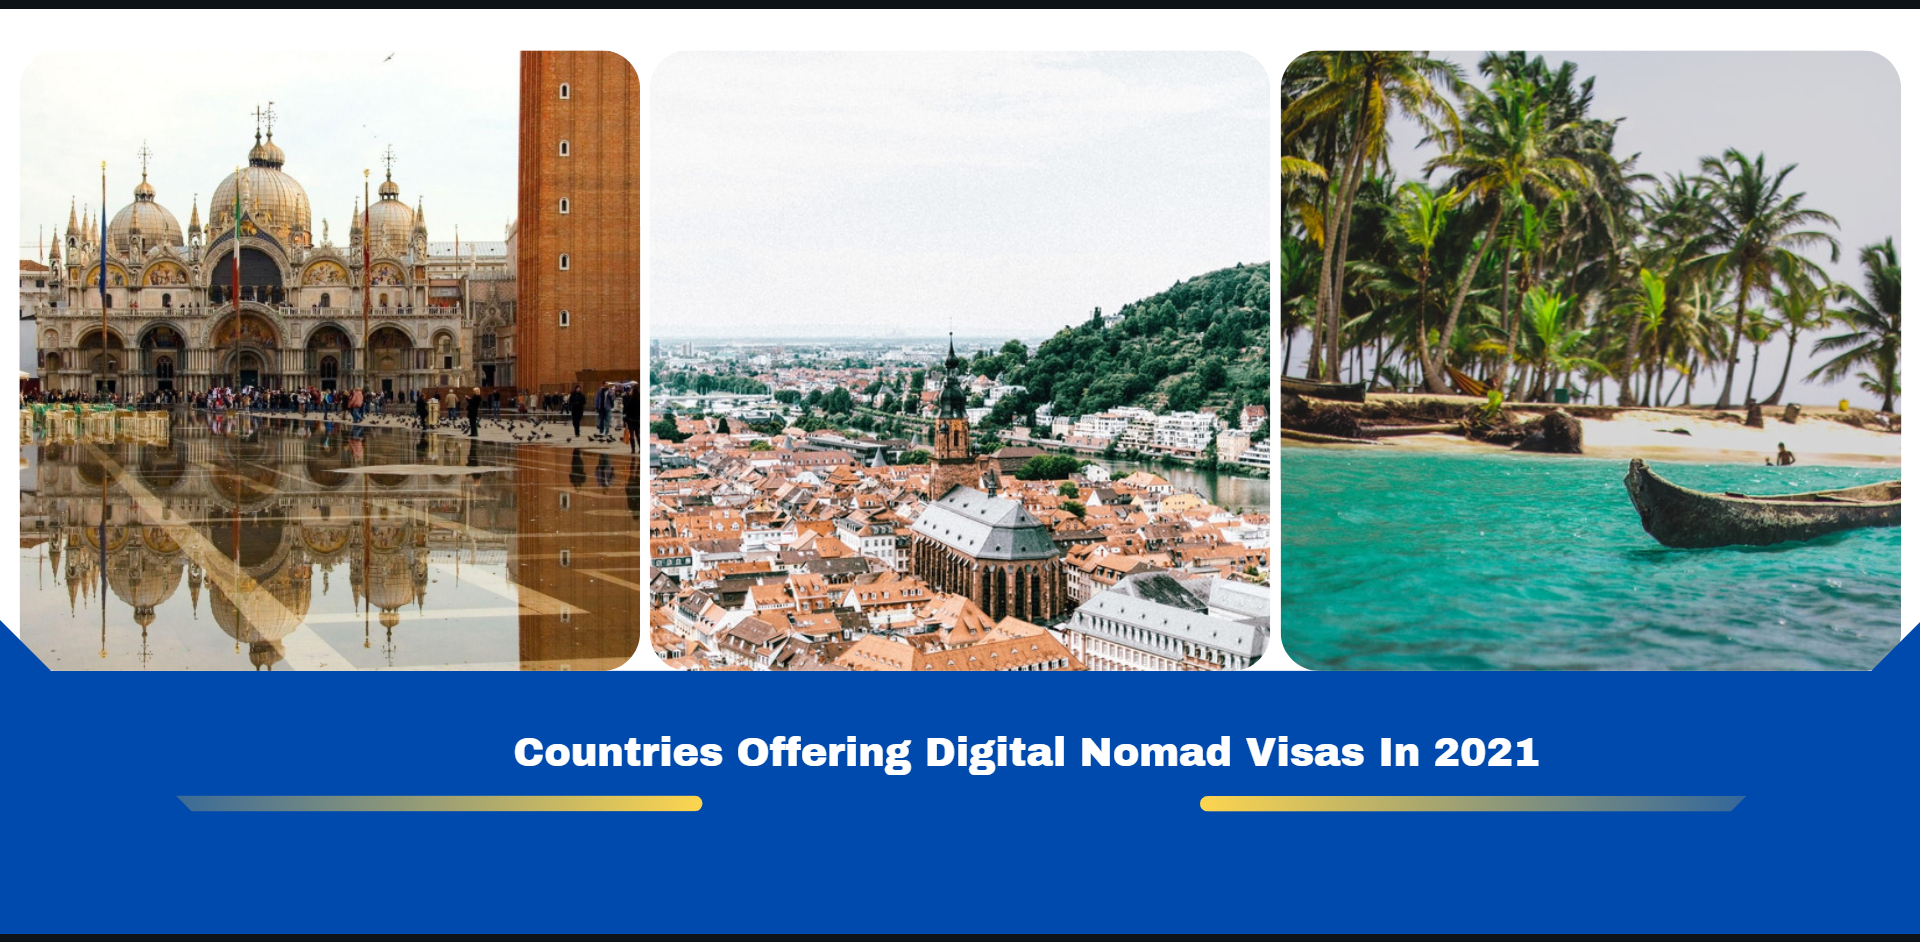 Countries Offering Digital Nomad Visas in 2021